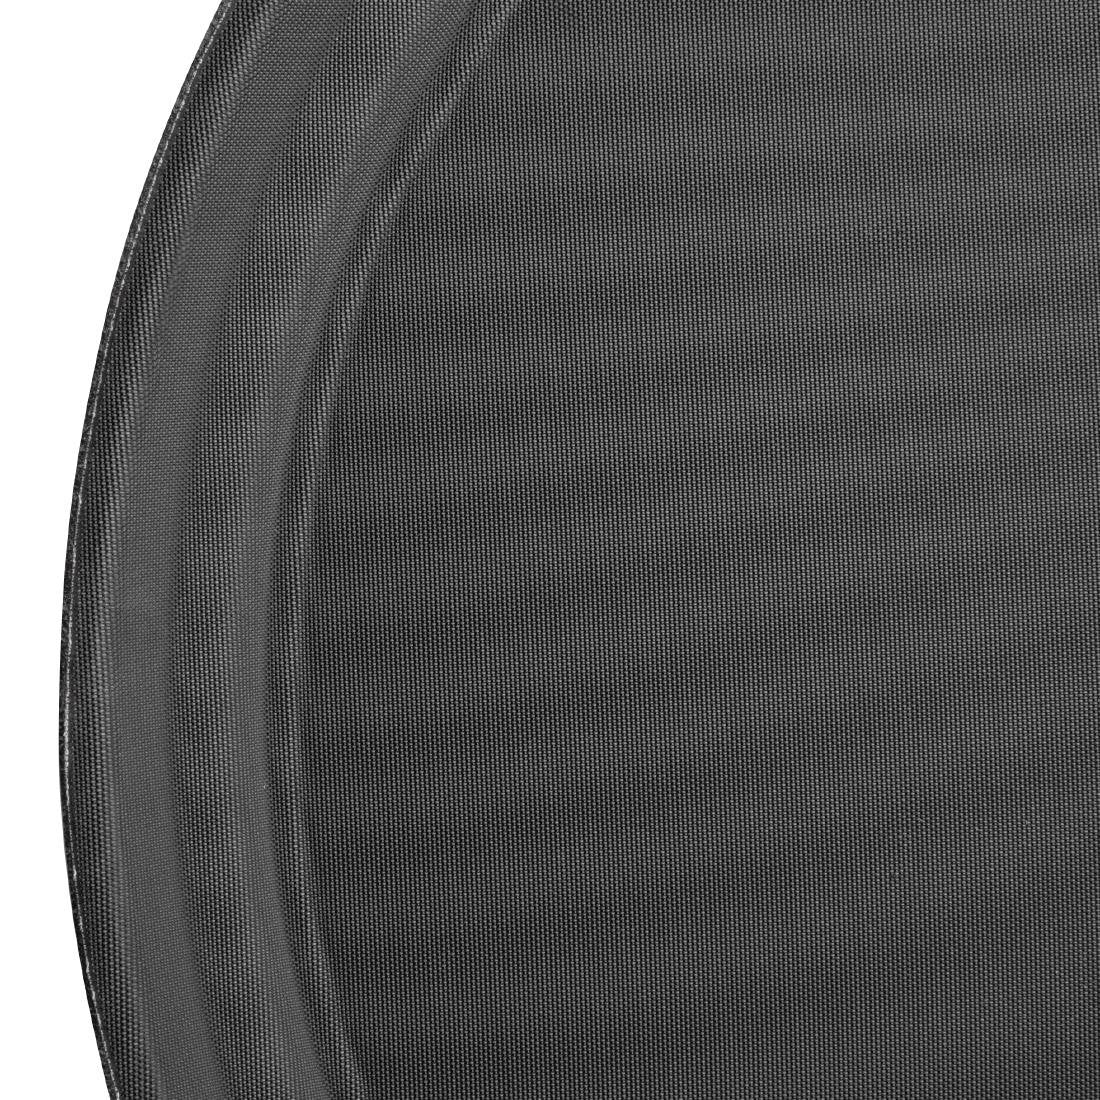 Kristallon Fibreglass Round Non-Slip Tray Black 280mm JD Catering Equipment Solutions Ltd